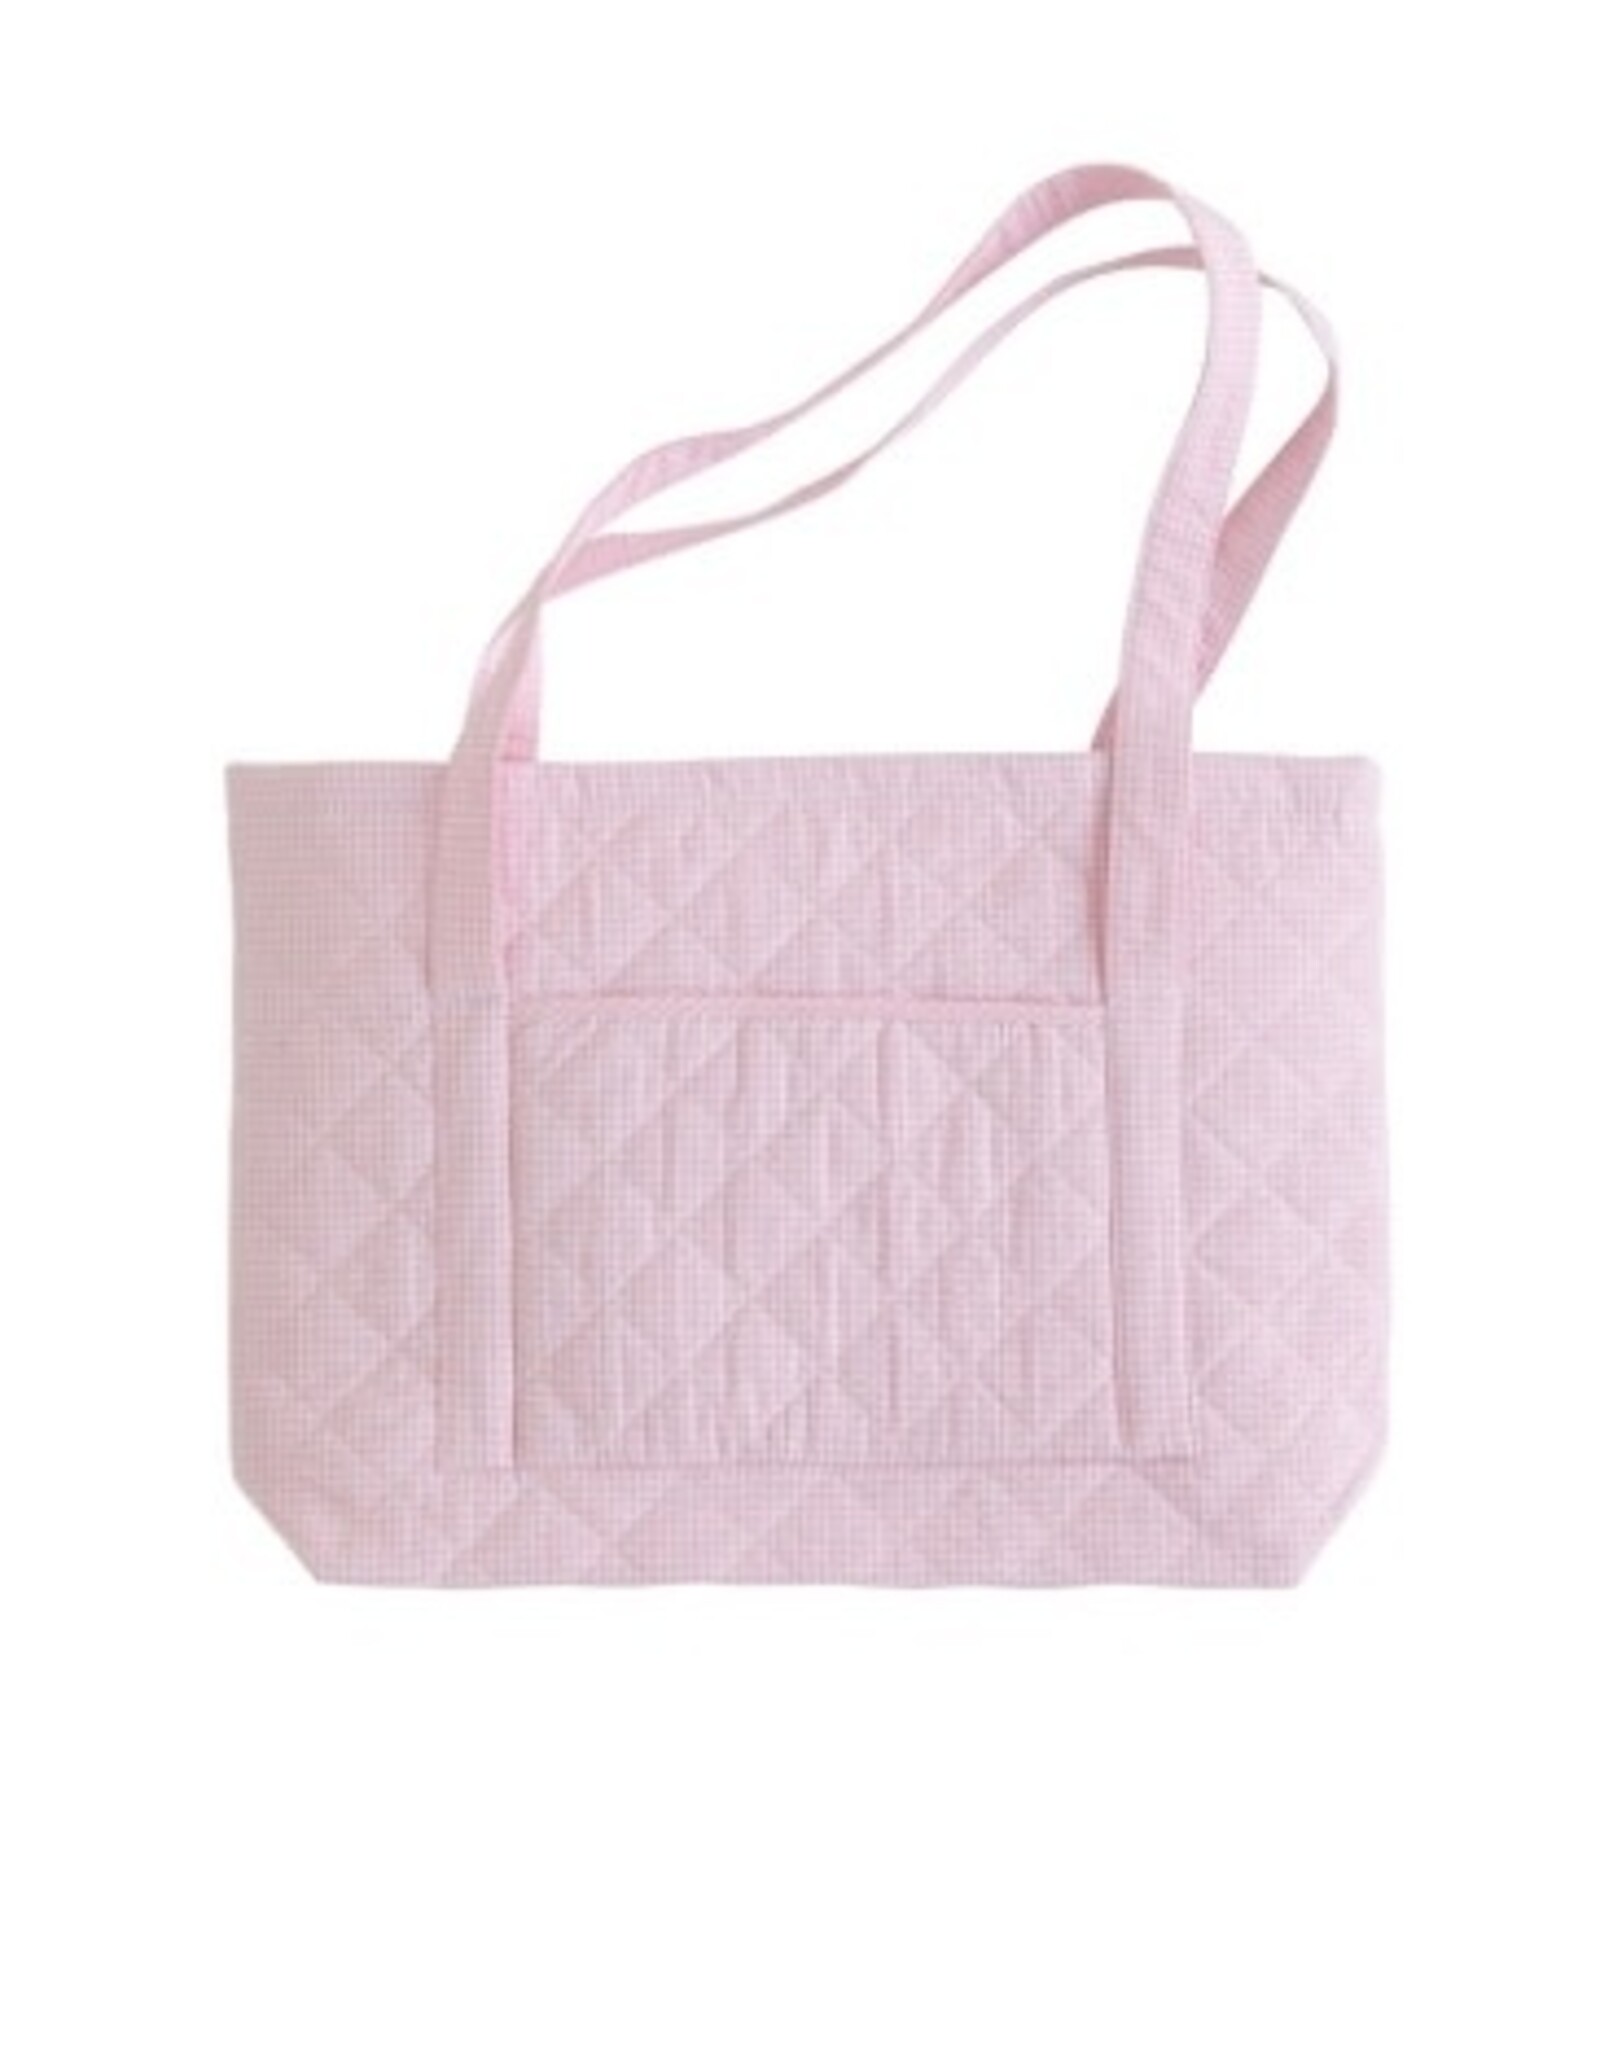 Light Pink Tote Bag